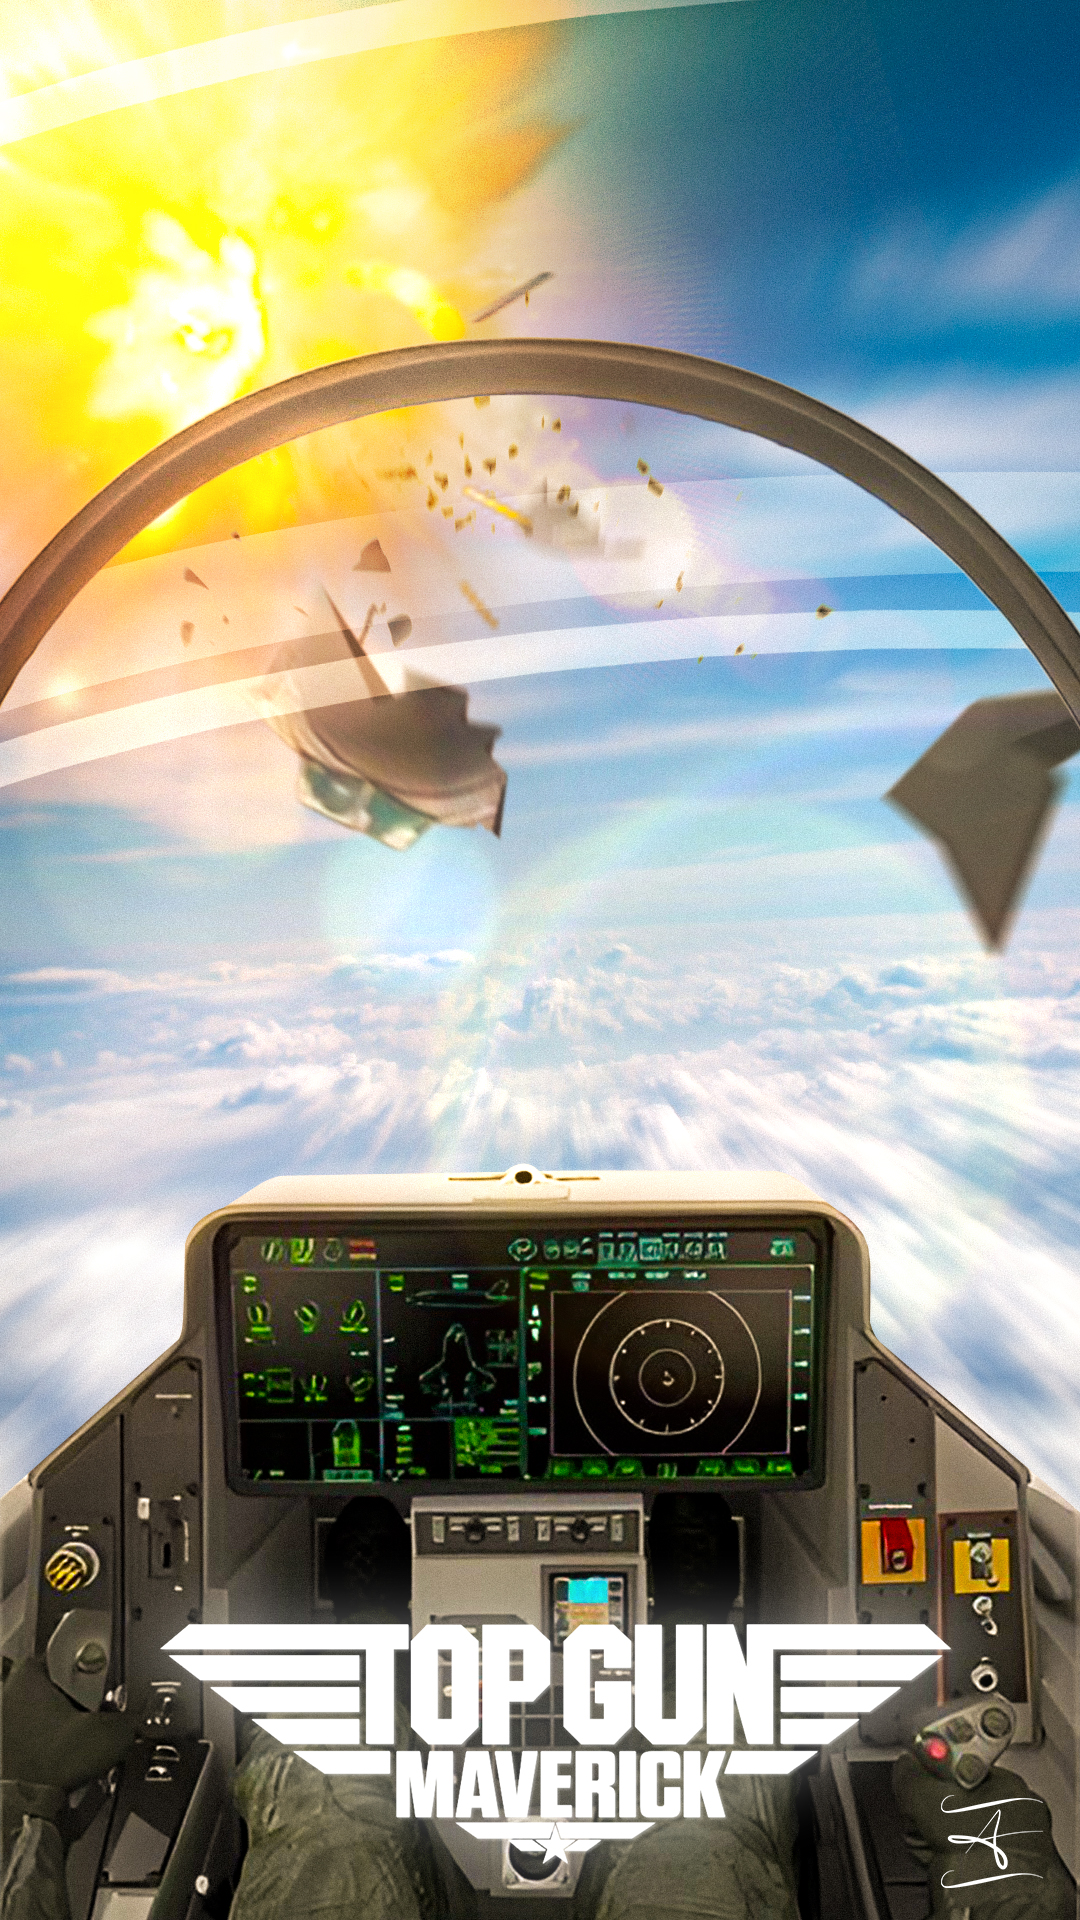 Microsoft Flight Simulator Free Top Gun Maverick Expansion Release Date  Set for May 25  Technology News